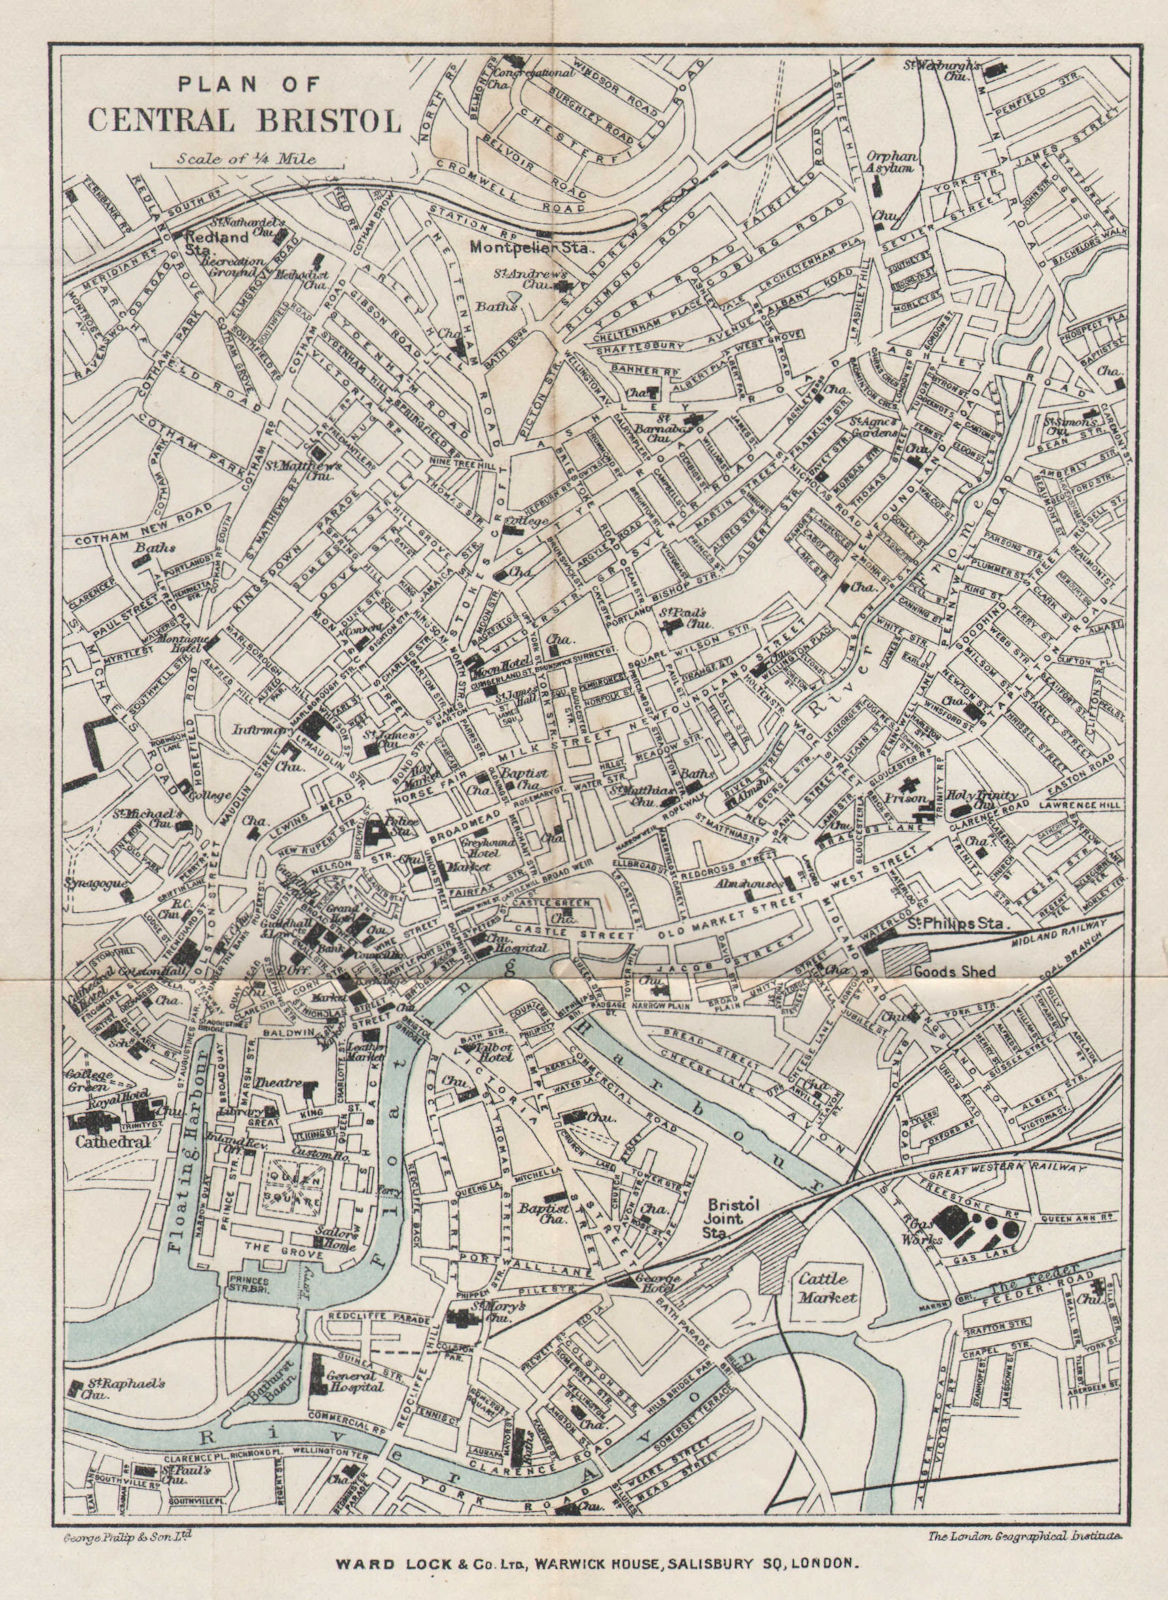 CENTRAL BRISTOL vintage town/city plan. Redcliffe Redland. WARD LOCK 1904 map